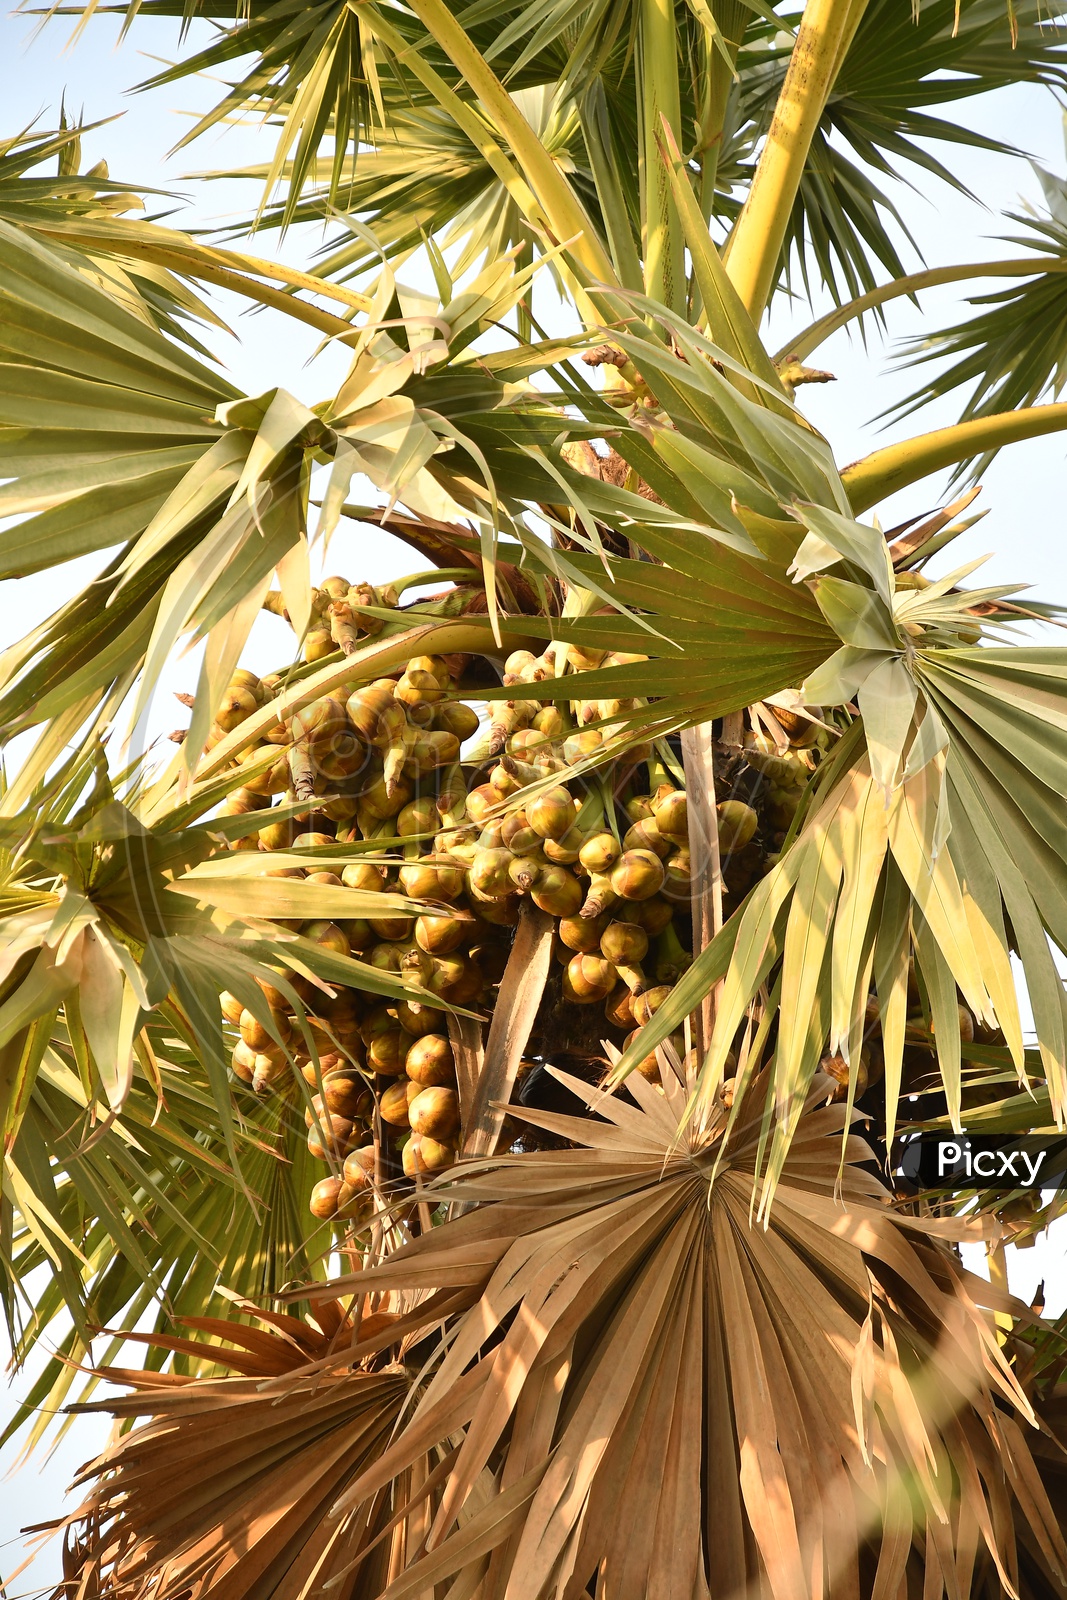 Indian Palmyra Fruits of a Palm Tree